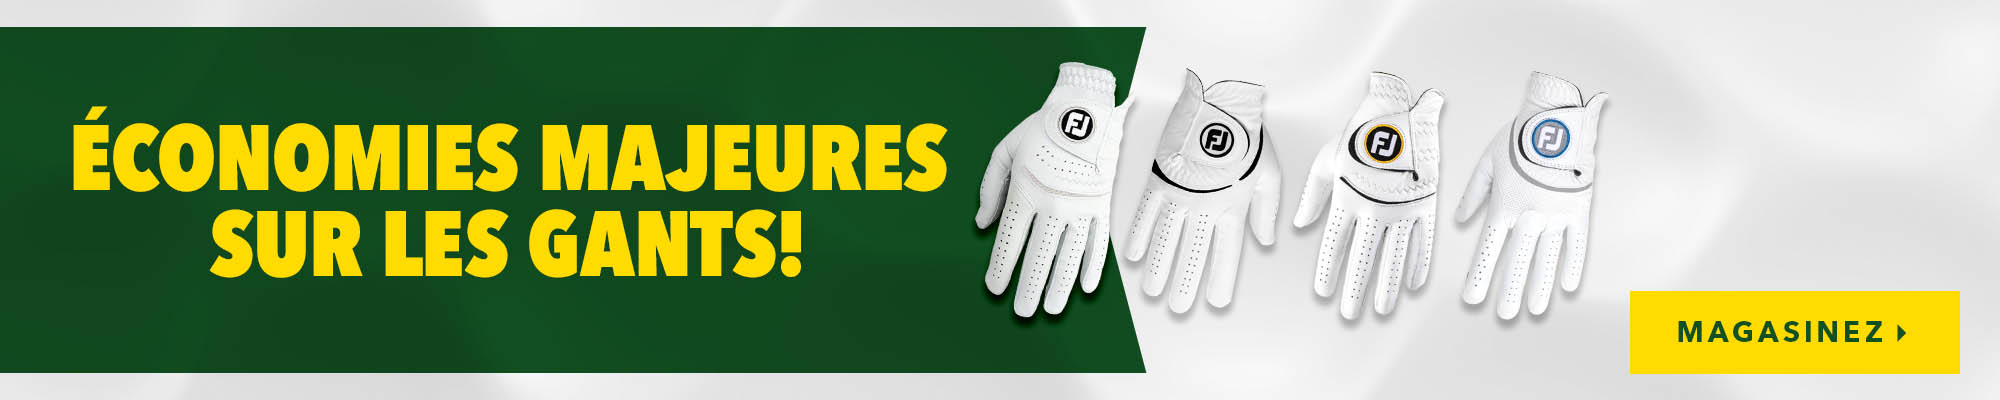 Select Footjoy Gloves - Buy 3, Get 1 Free! 